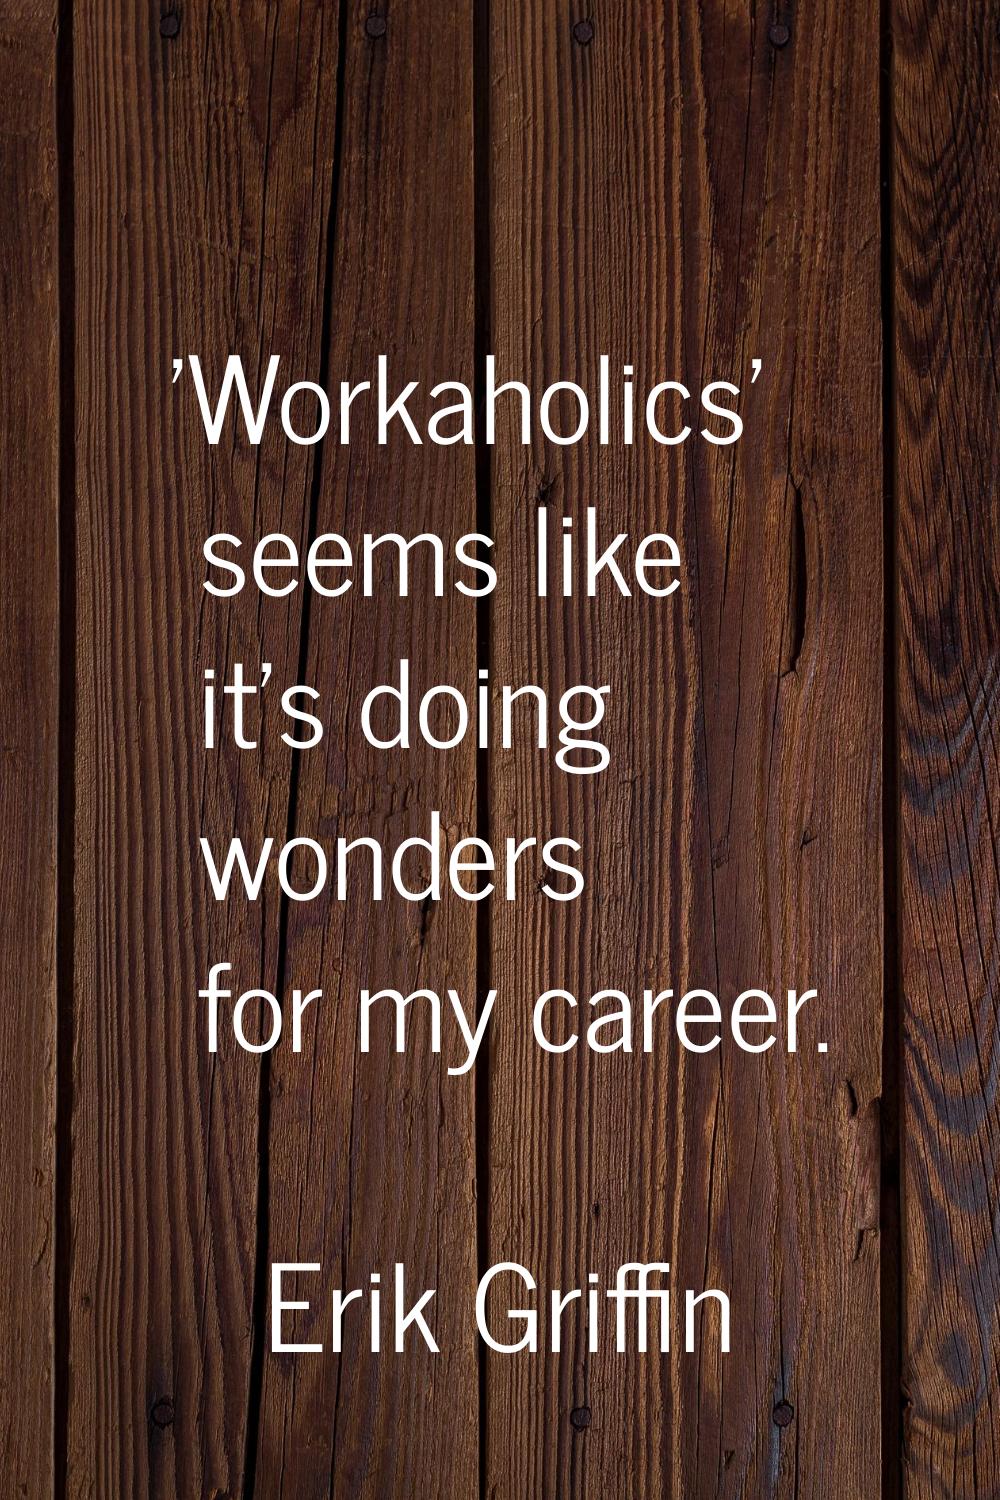 'Workaholics' seems like it's doing wonders for my career.